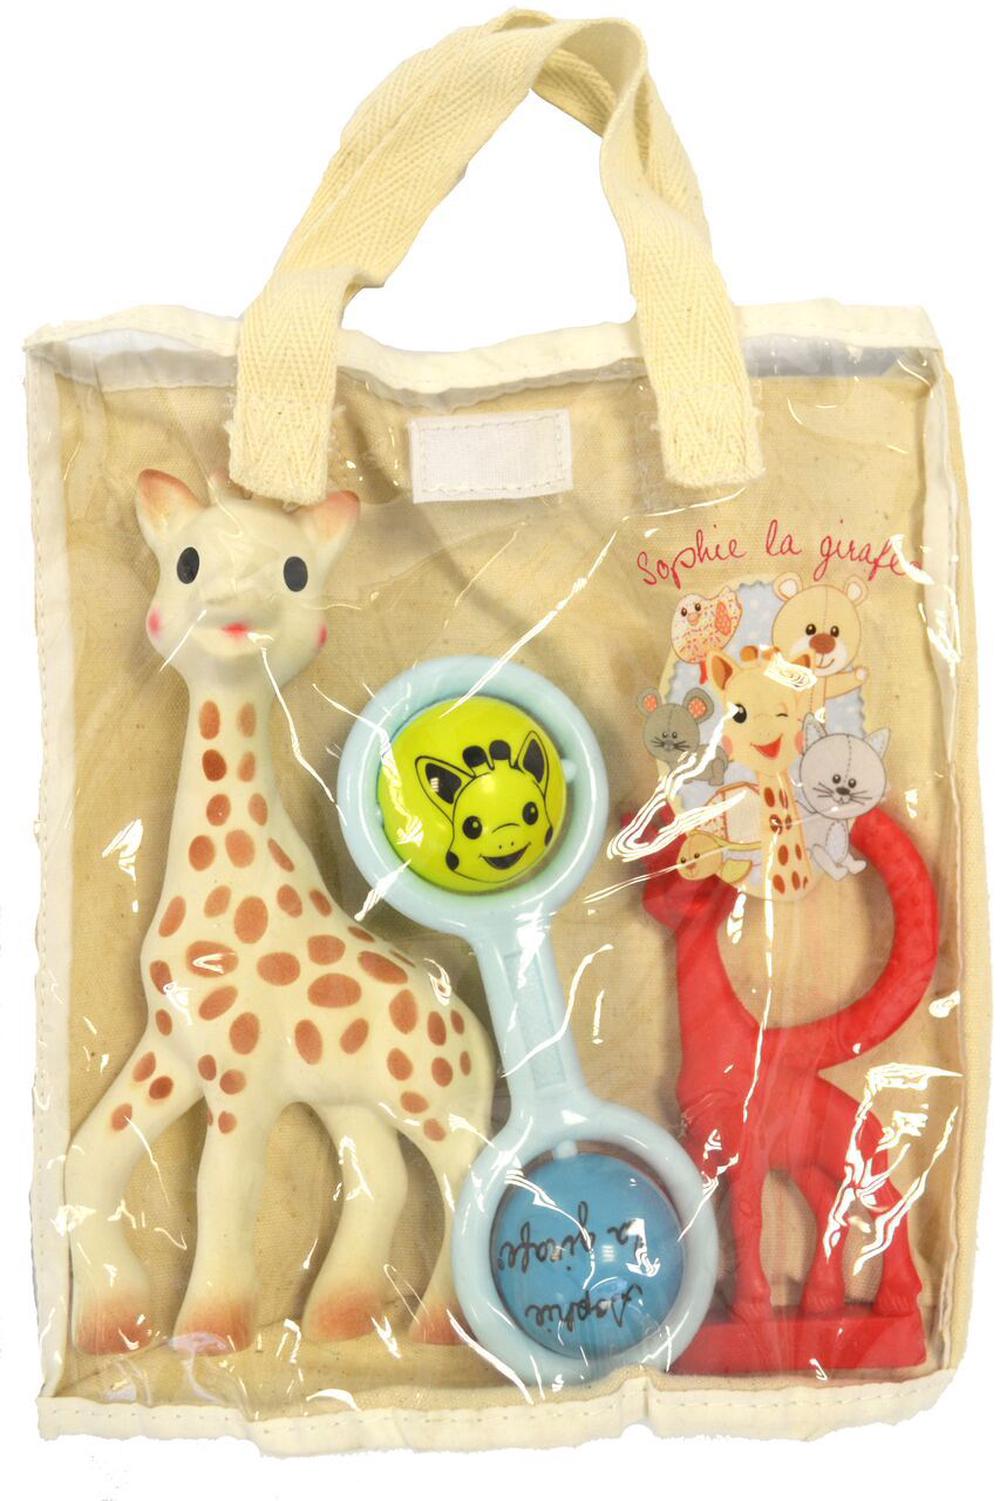 Giraffe Summer Gift Bag Free Shipping 